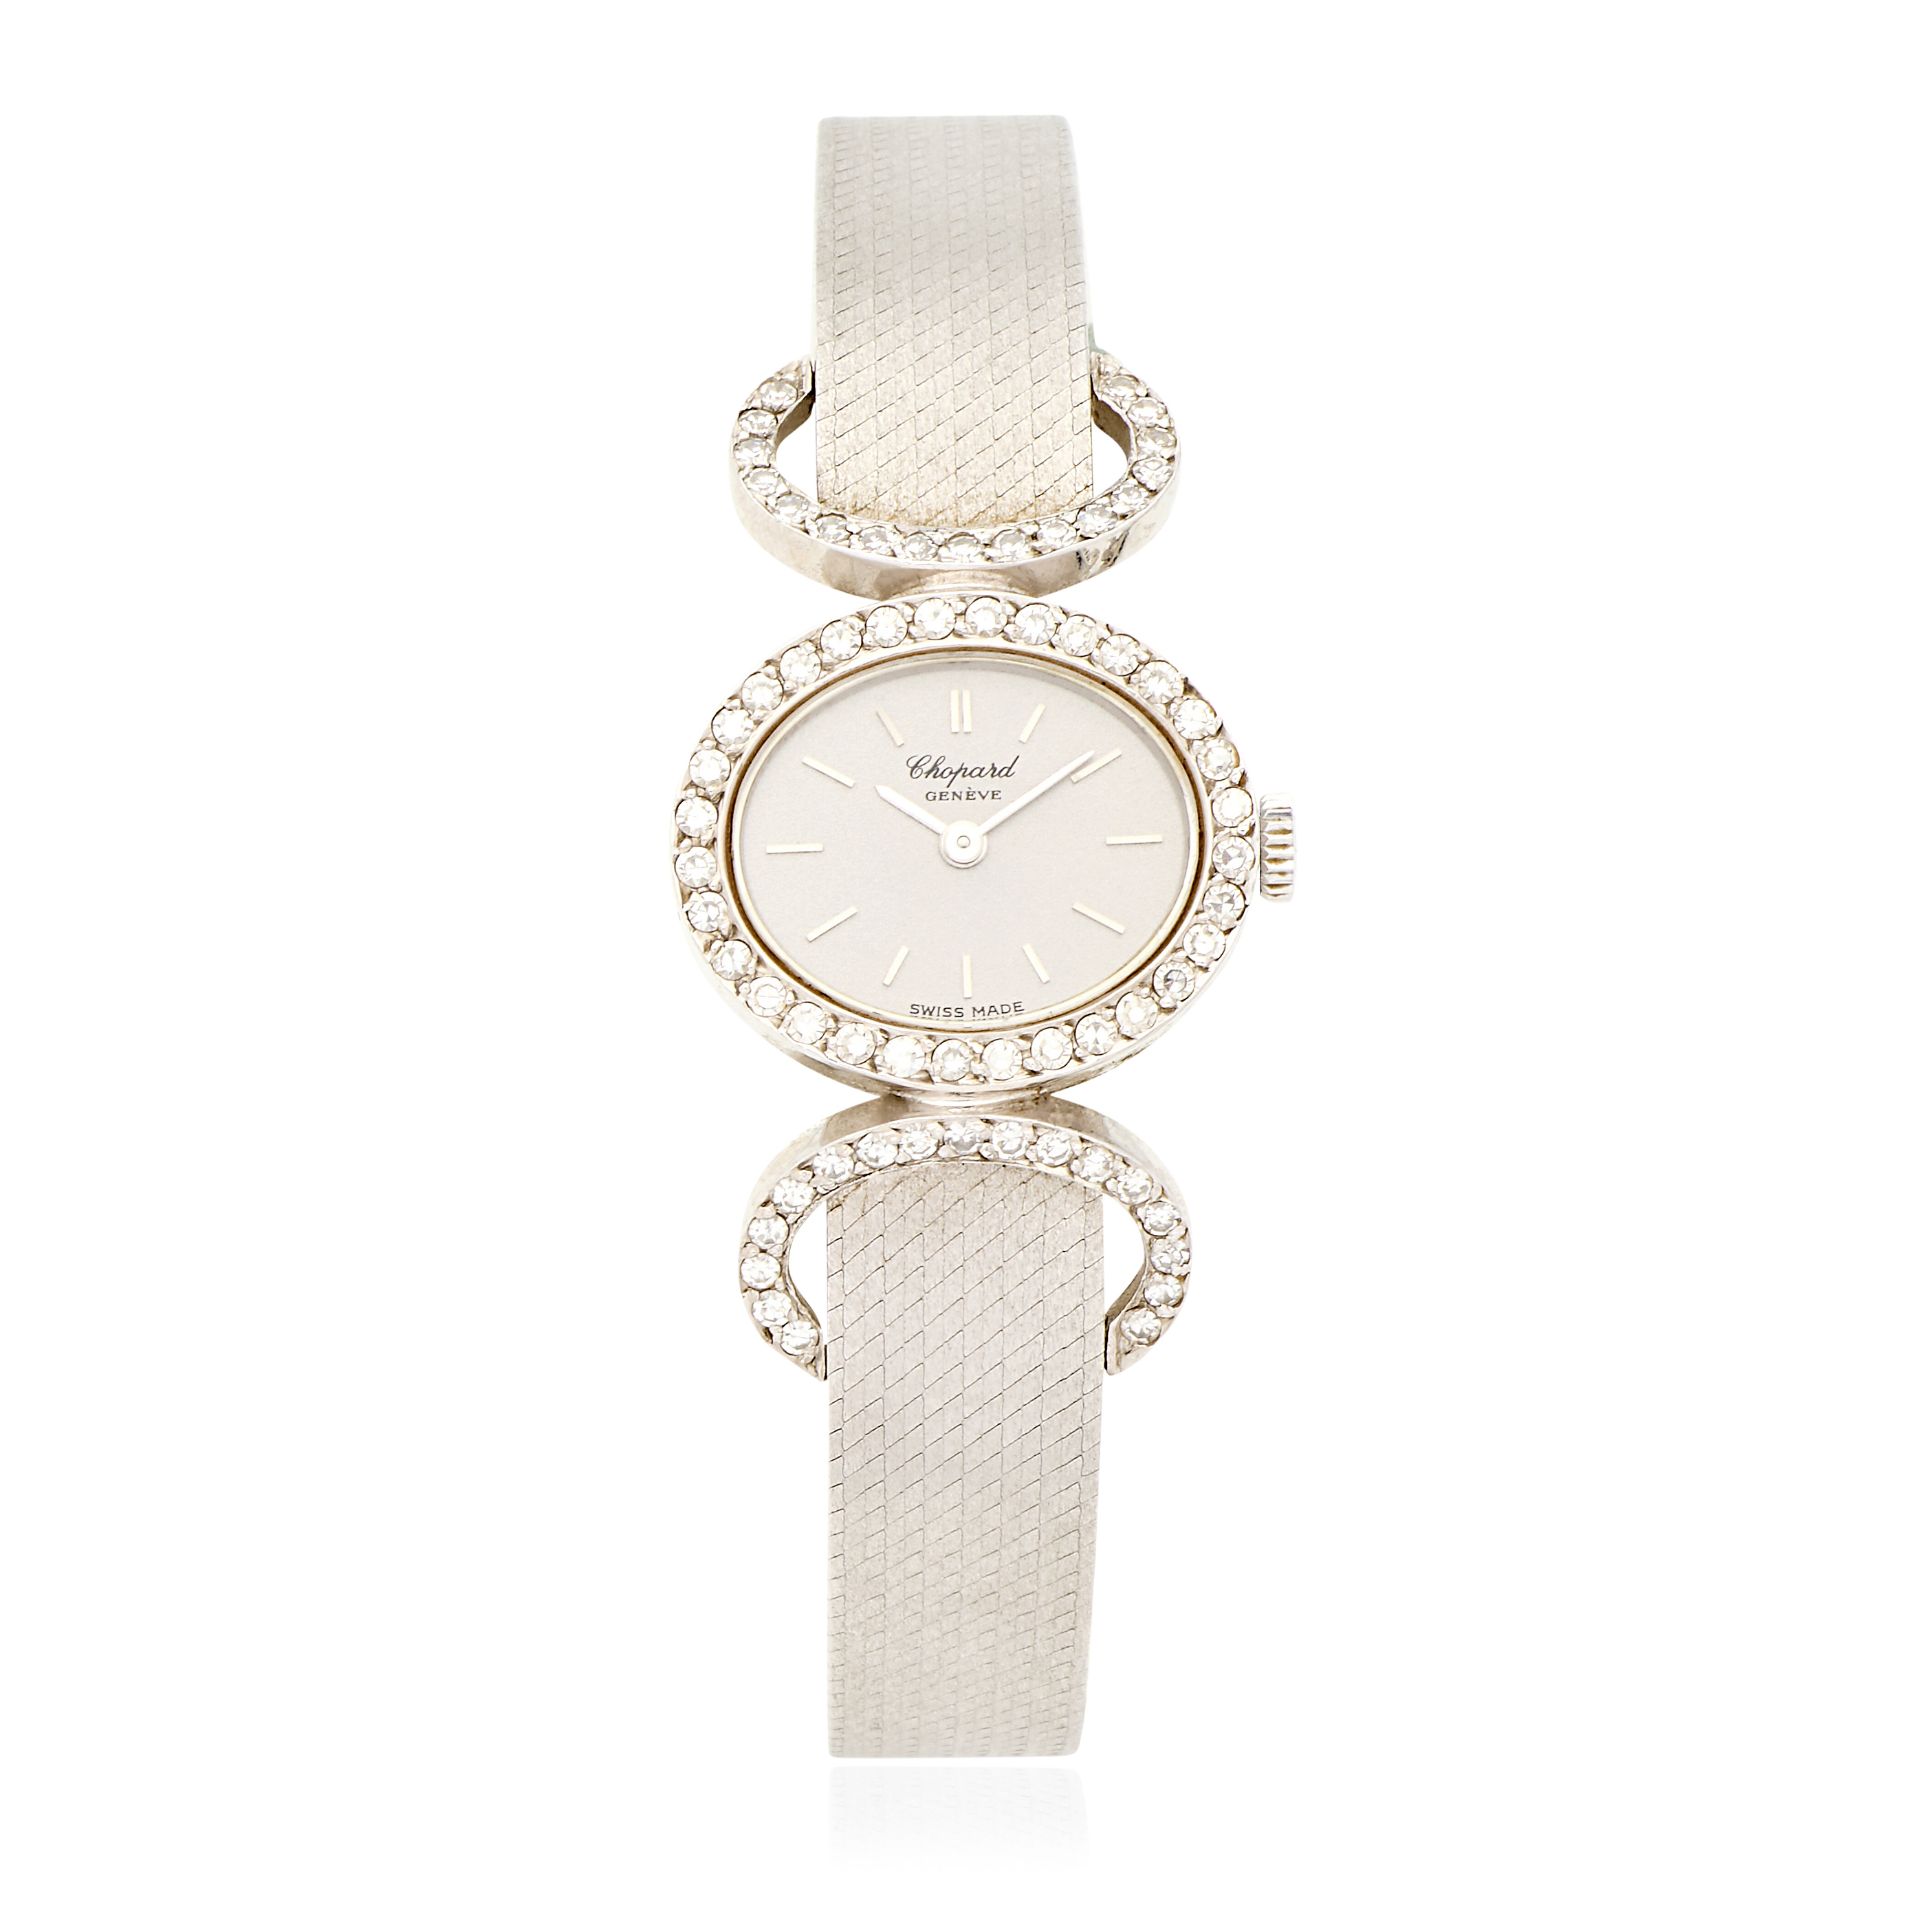 Chopard. An 18K white gold diamond set manual wind bracelet watch Purchased 8th January 1982